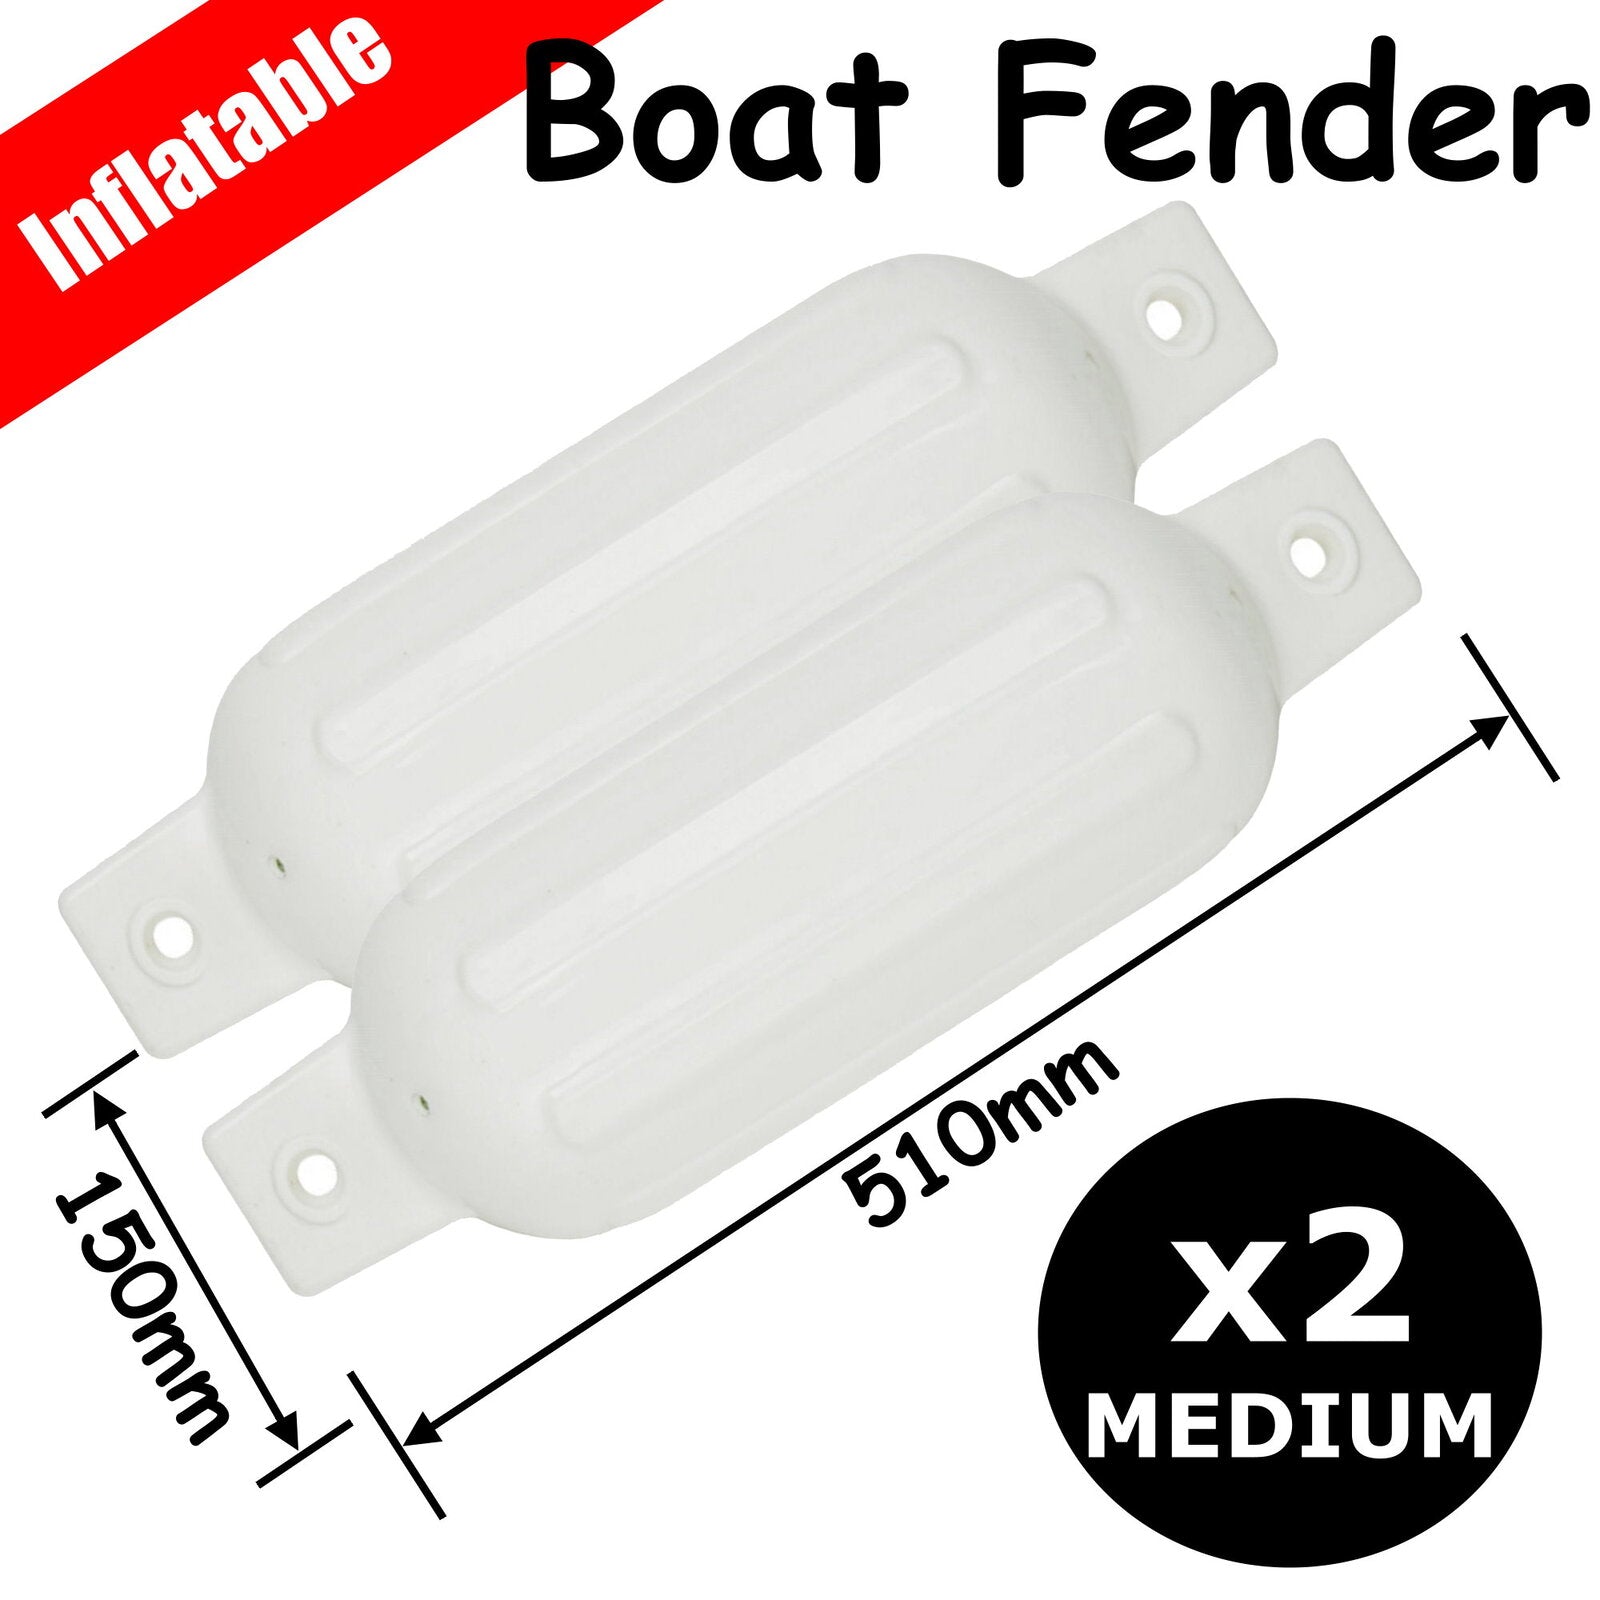 2 x MEDIUM Boat Fender 510x150mm Inflatable Marine Dock Buffer Twin Eye Ribbed White